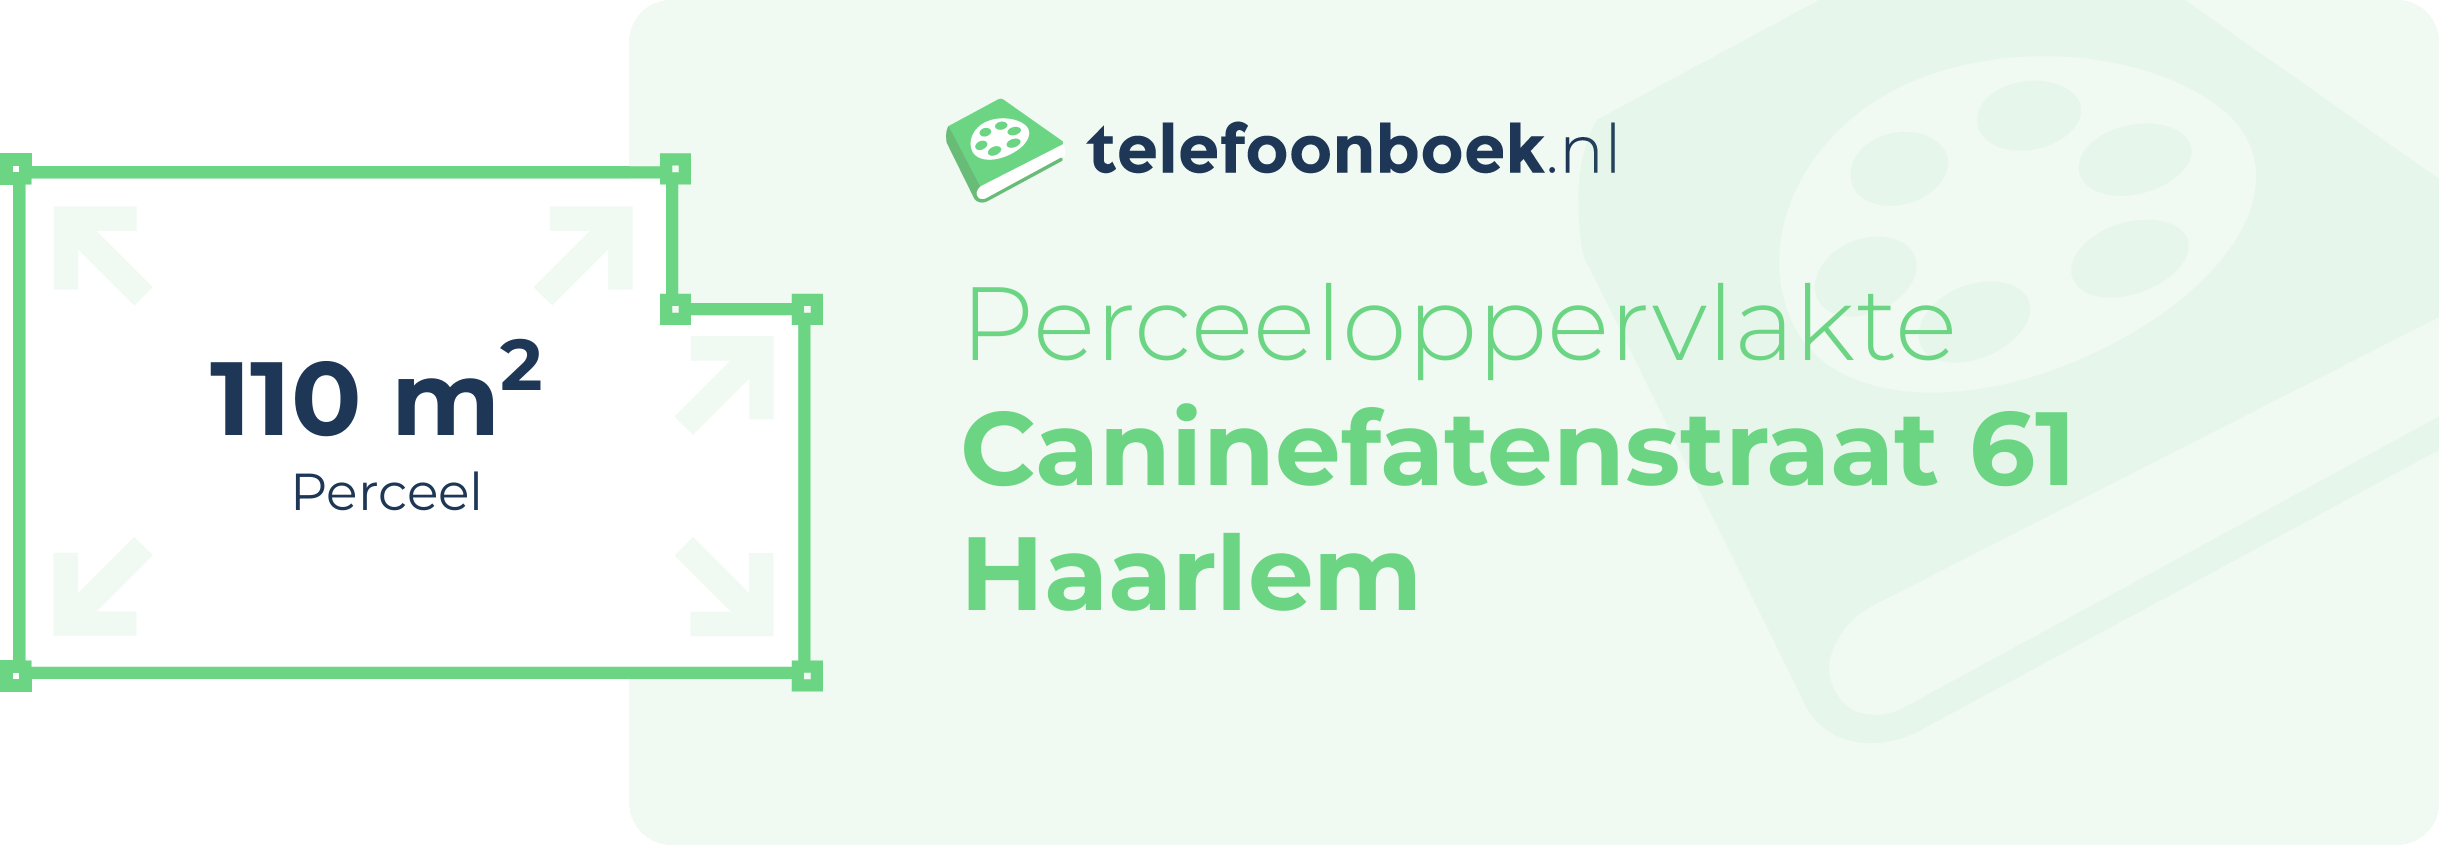 Perceeloppervlakte Caninefatenstraat 61 Haarlem